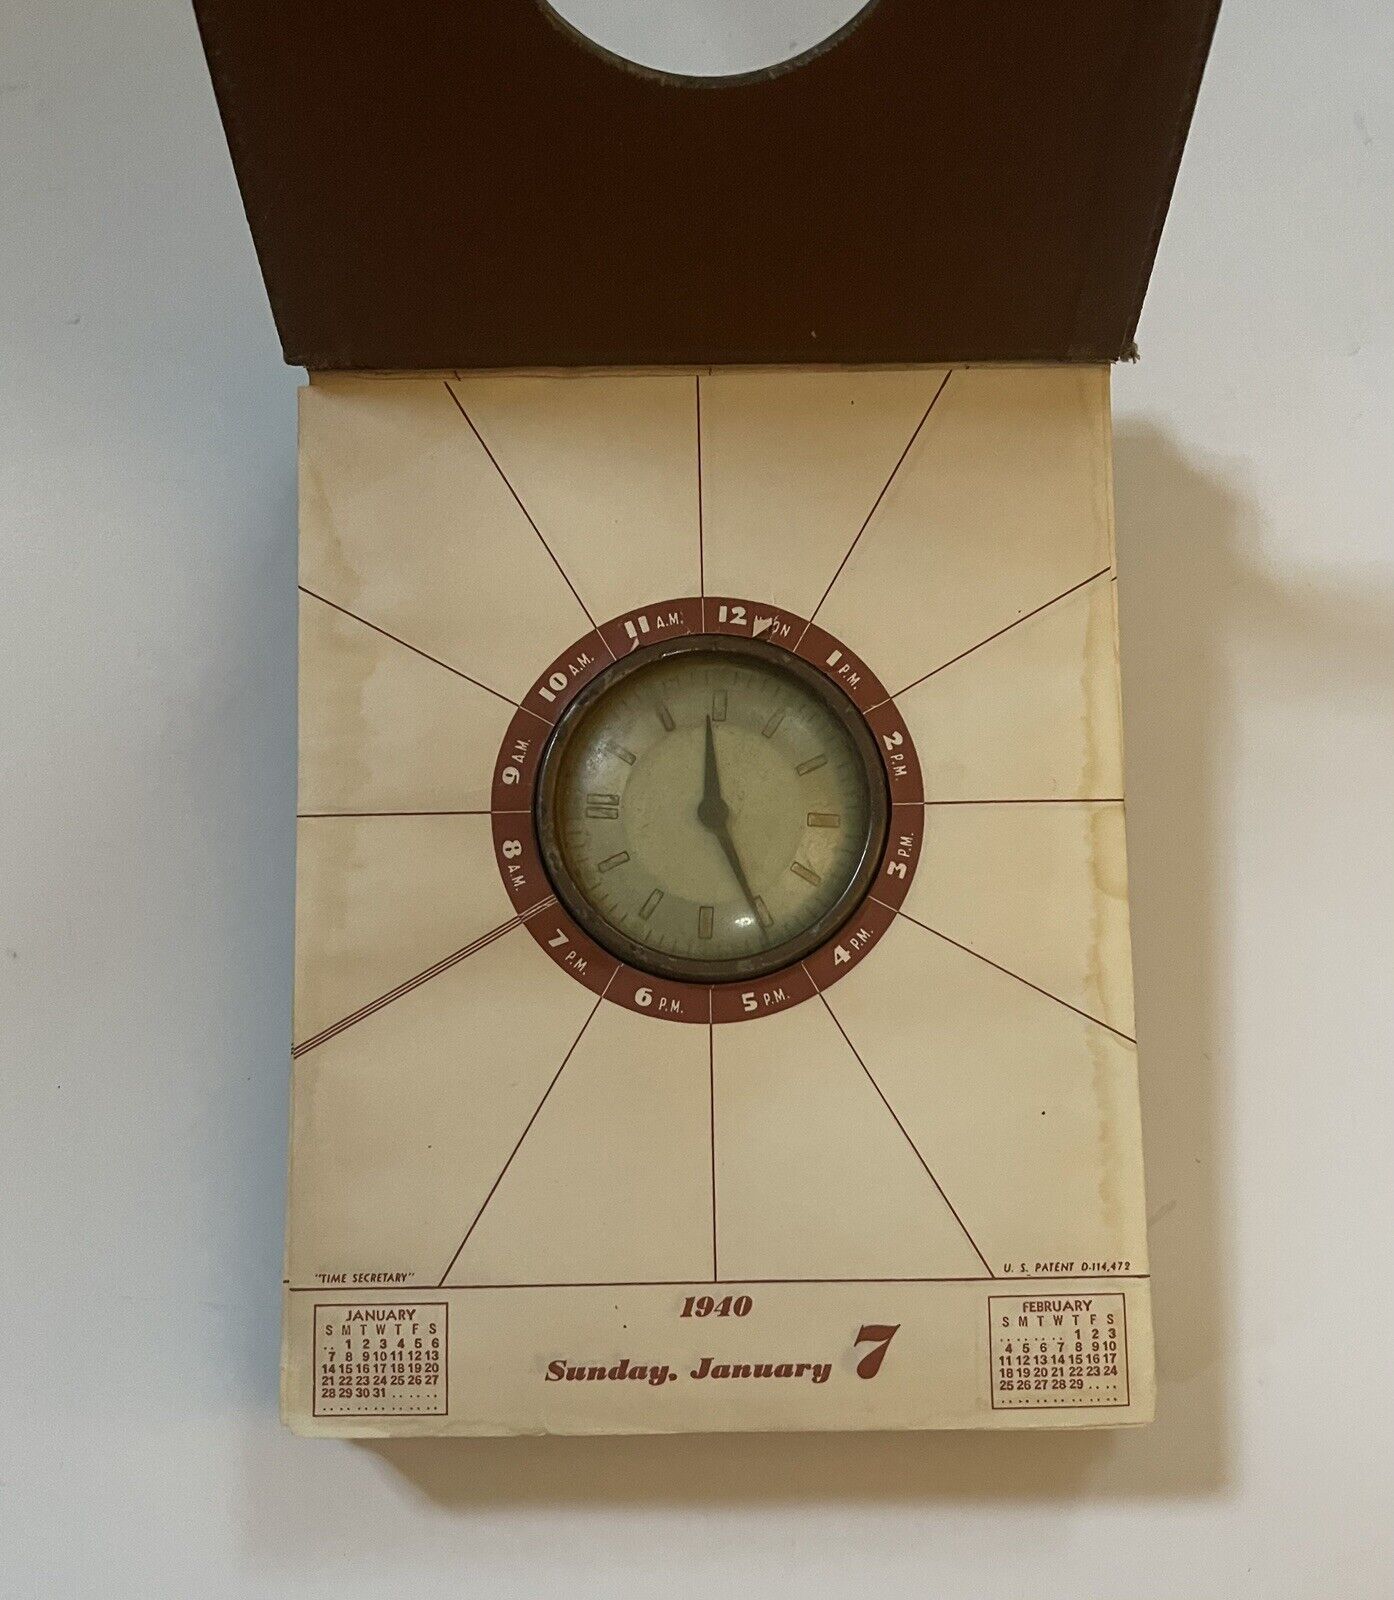 Vintage 1940 Park Sherman Time Secretary Desk Clock Calendar Jan 6-June 30, 1940